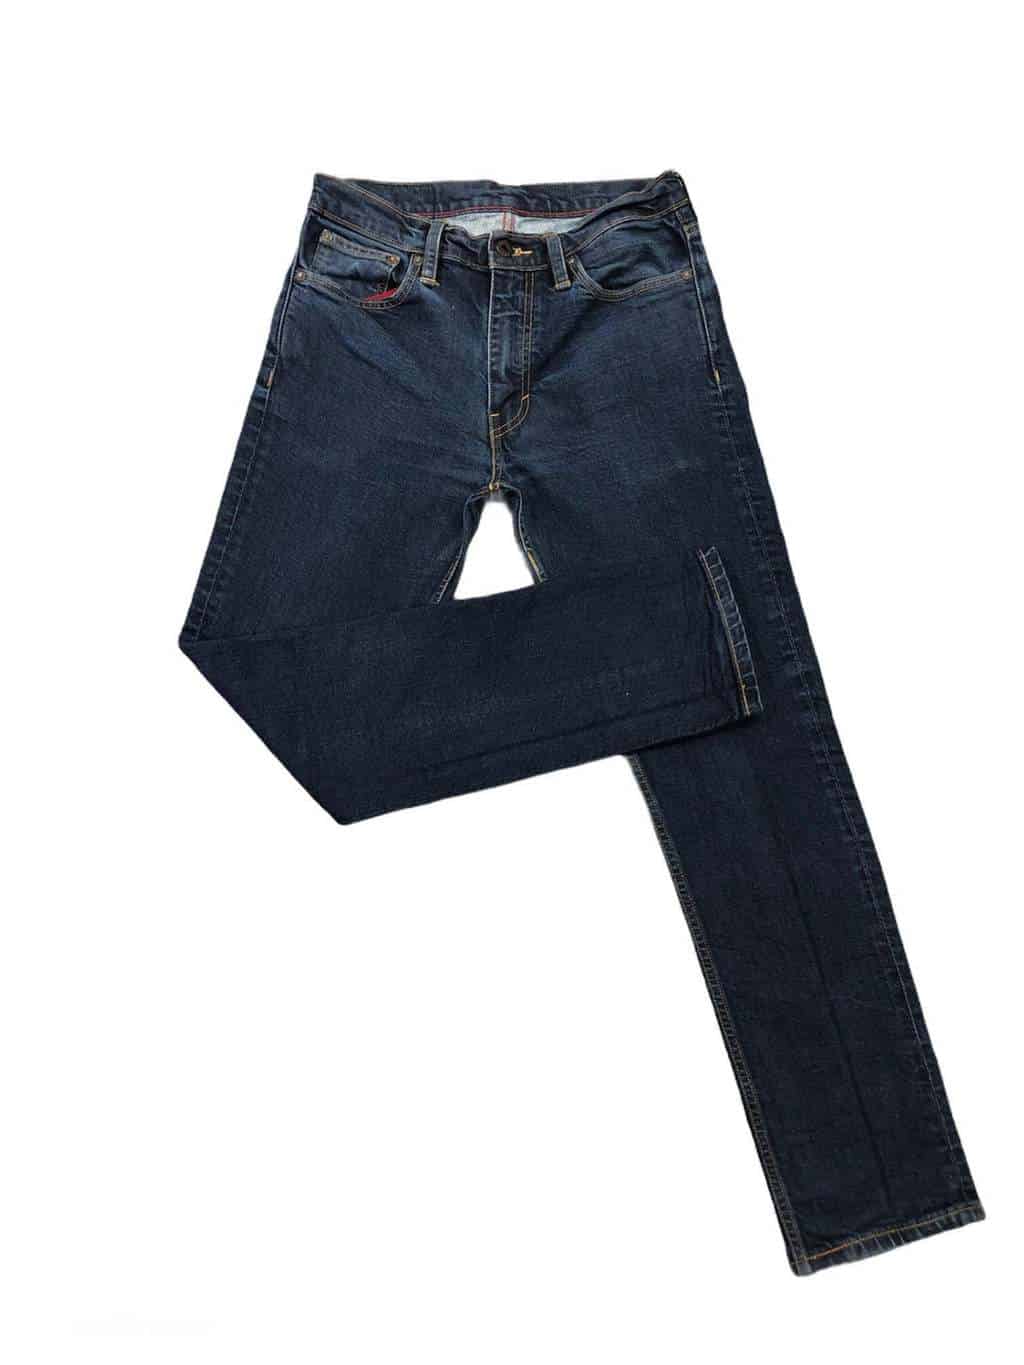 Levis 511 dark blue skateboarding jeans with reinforced stitching & red  details - W29 x  - St Cyr Vintage